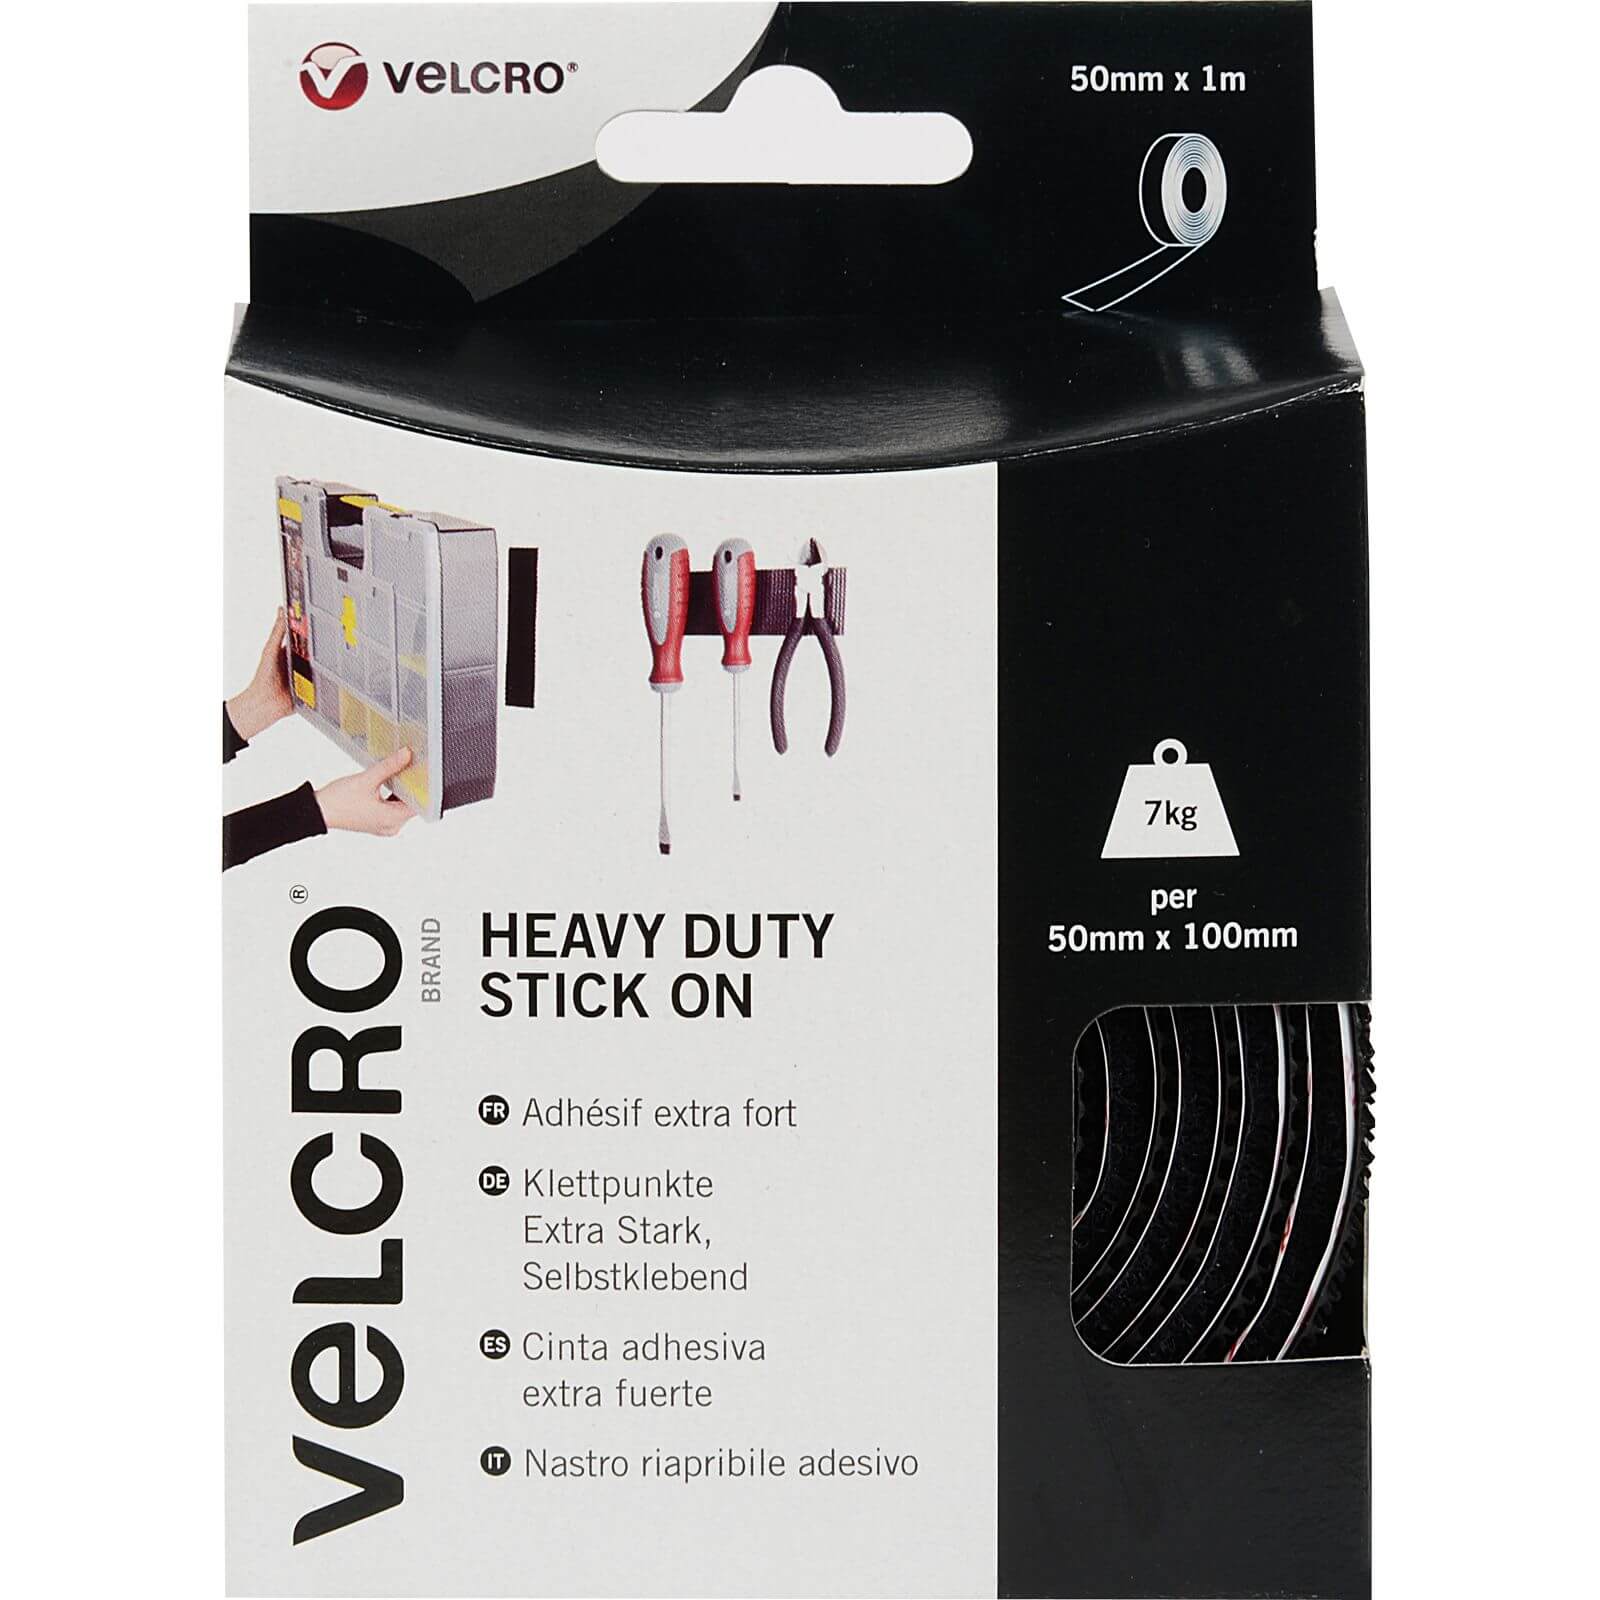 VELCRO? Brand Stick On Tape - Black - 50mm x 1m